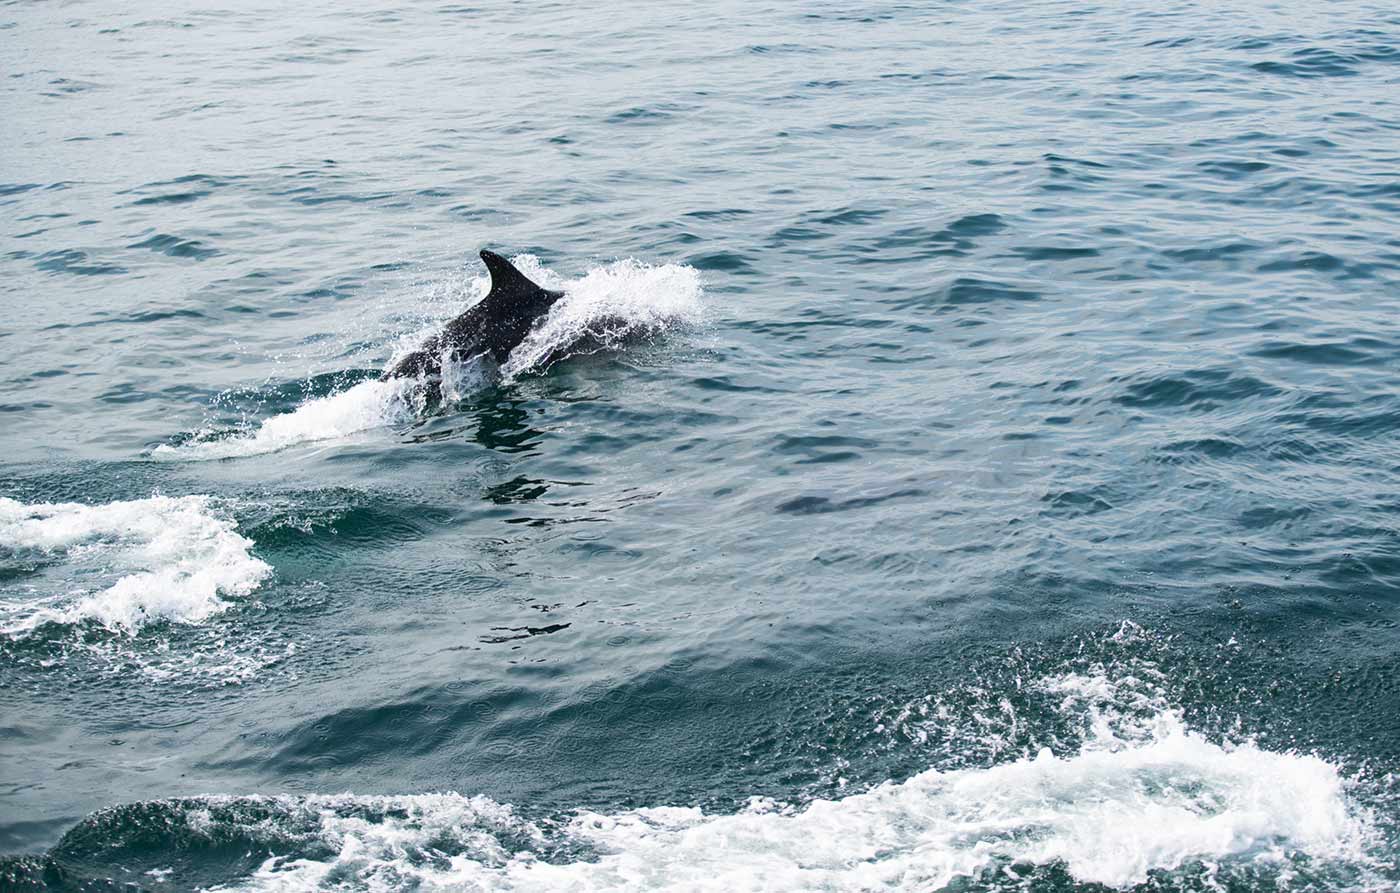 Dolphins at Treshnish Isles, Scotland